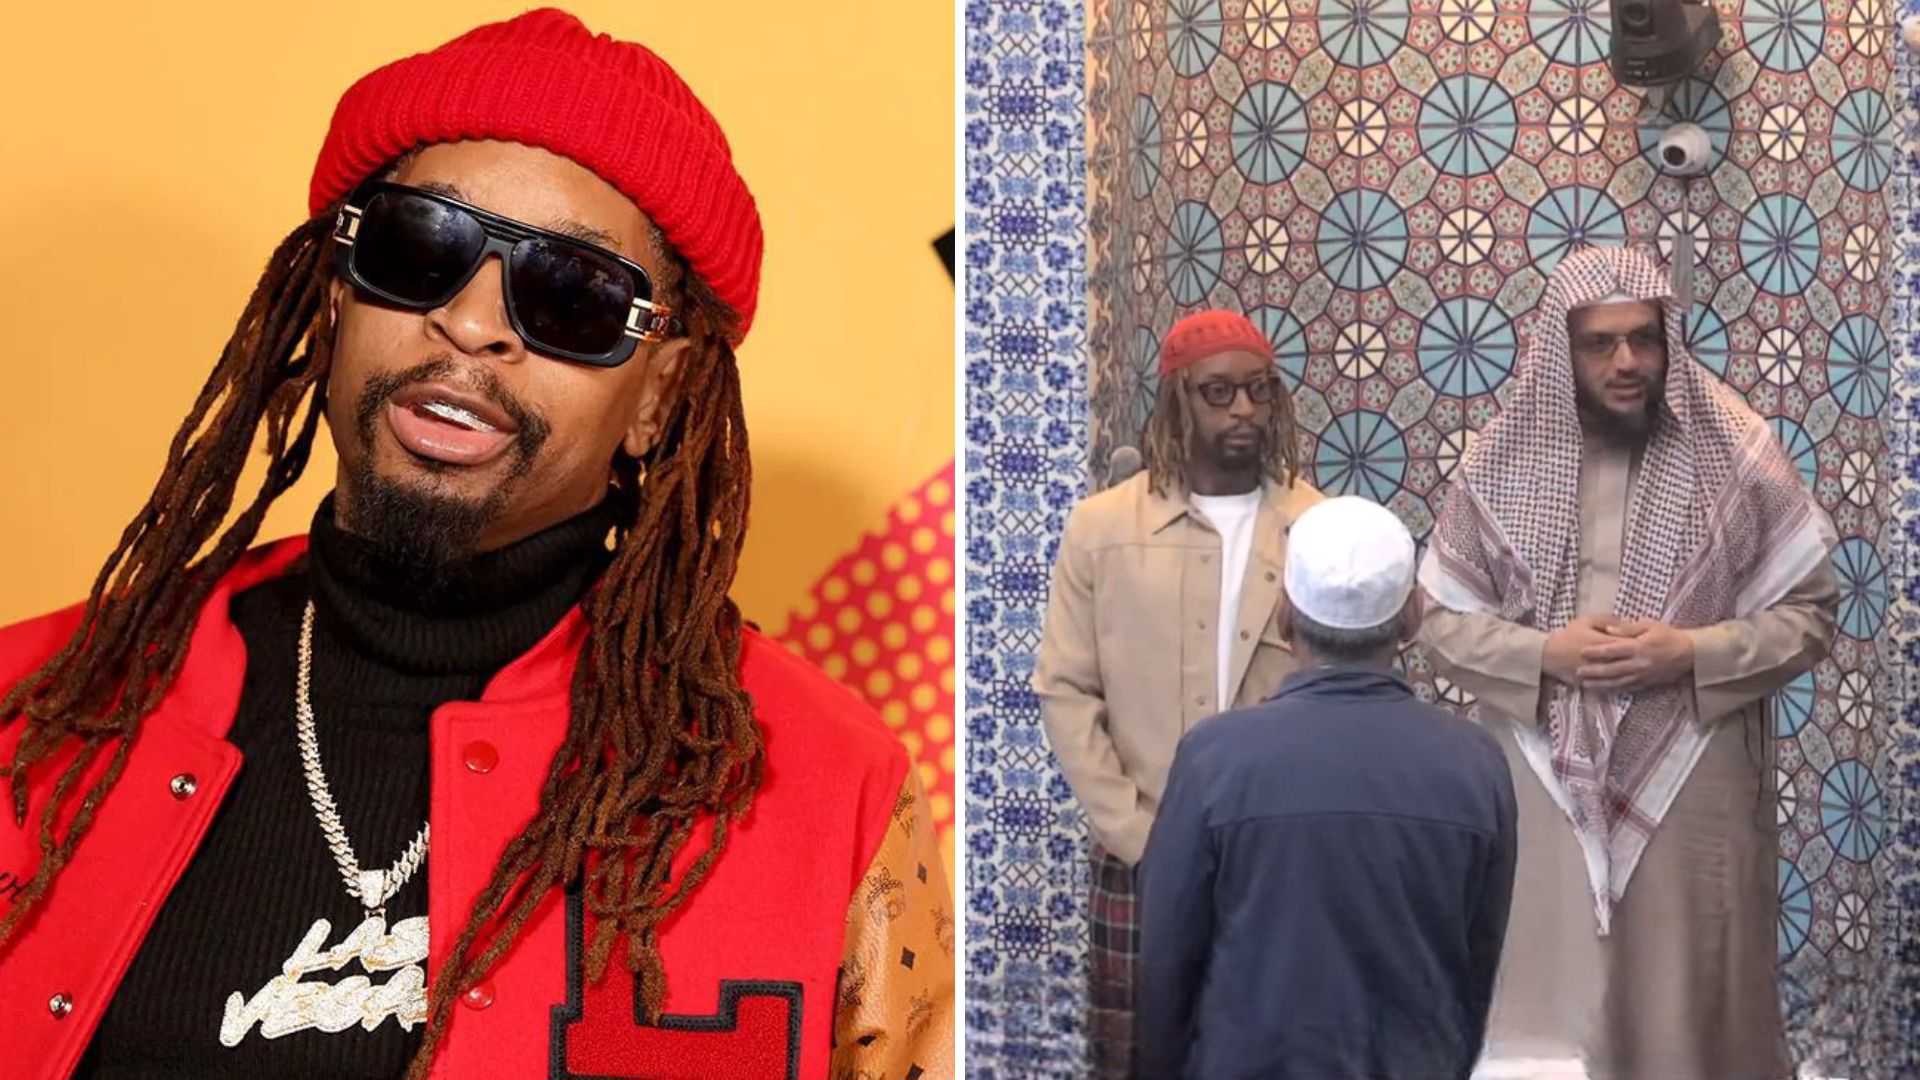 Famous US Rapper Lil Jon embraces Islam